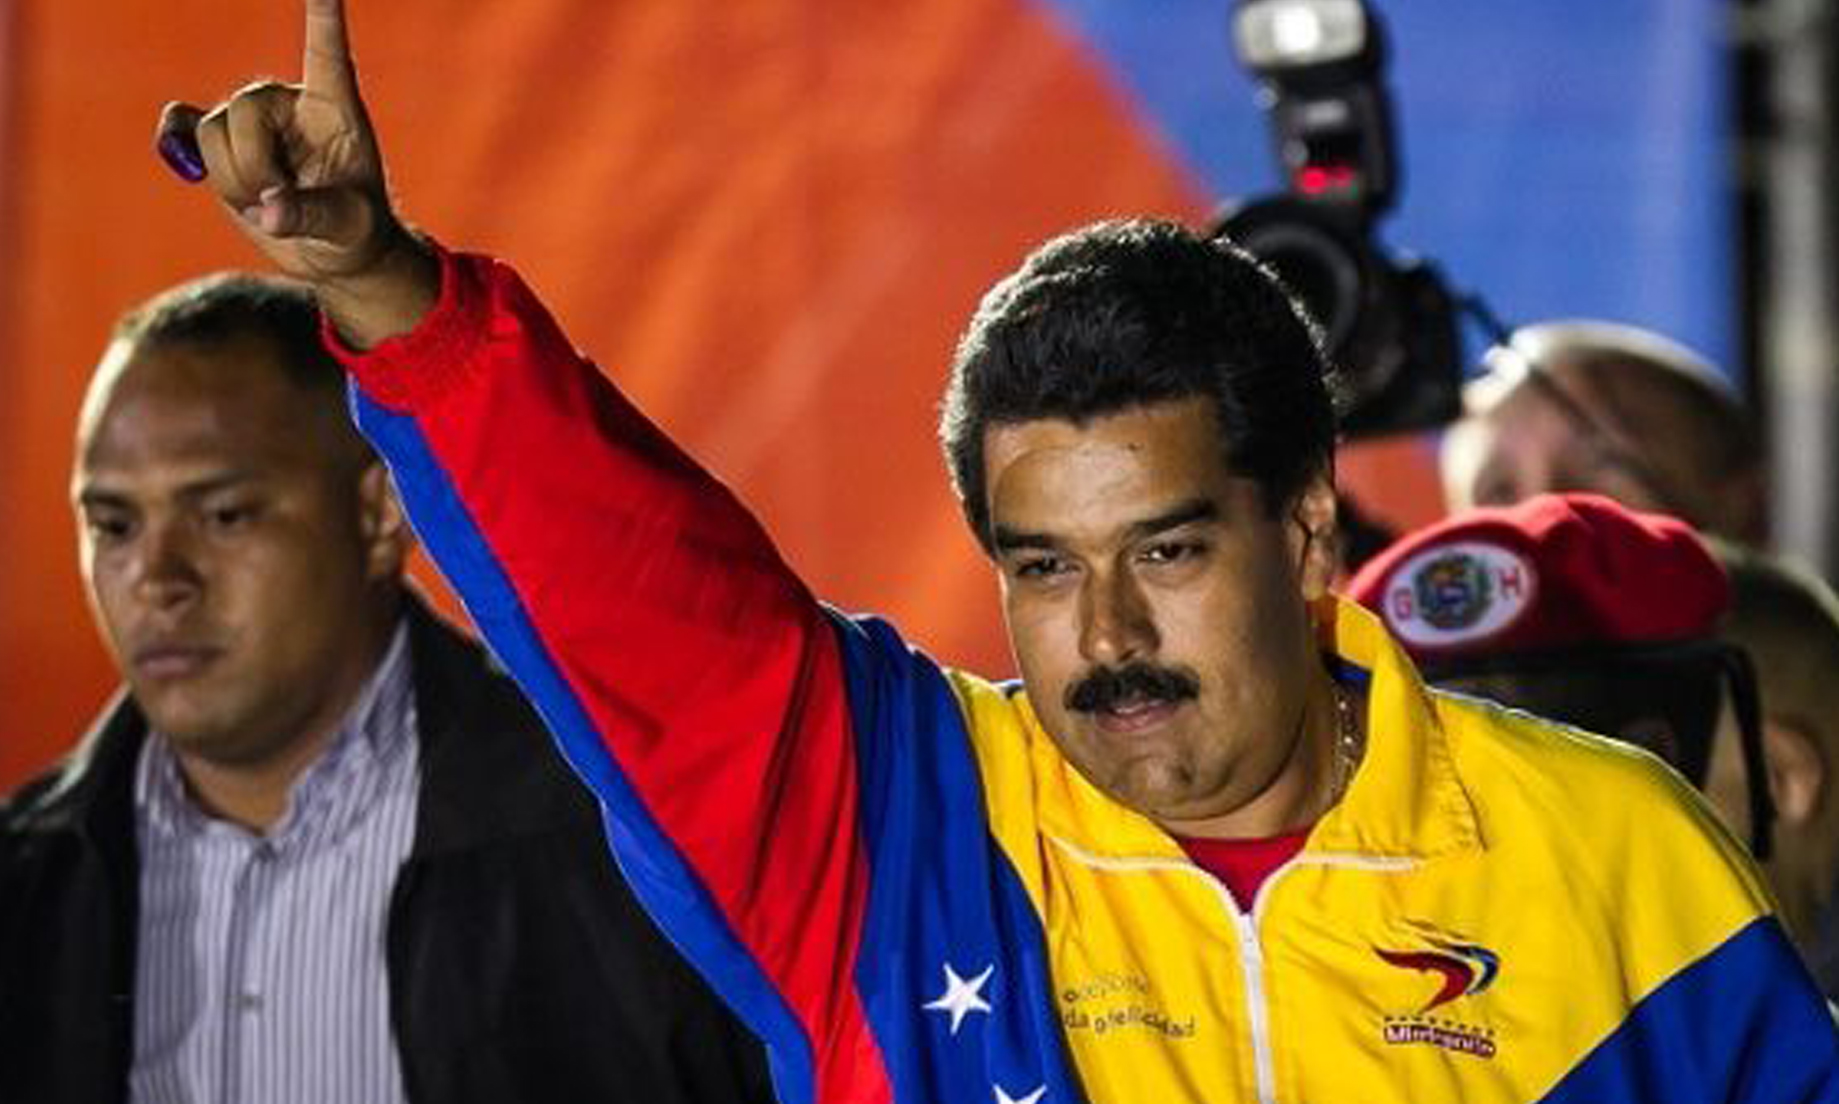 U.S. Military Still Actively Plotting Against Venezuela